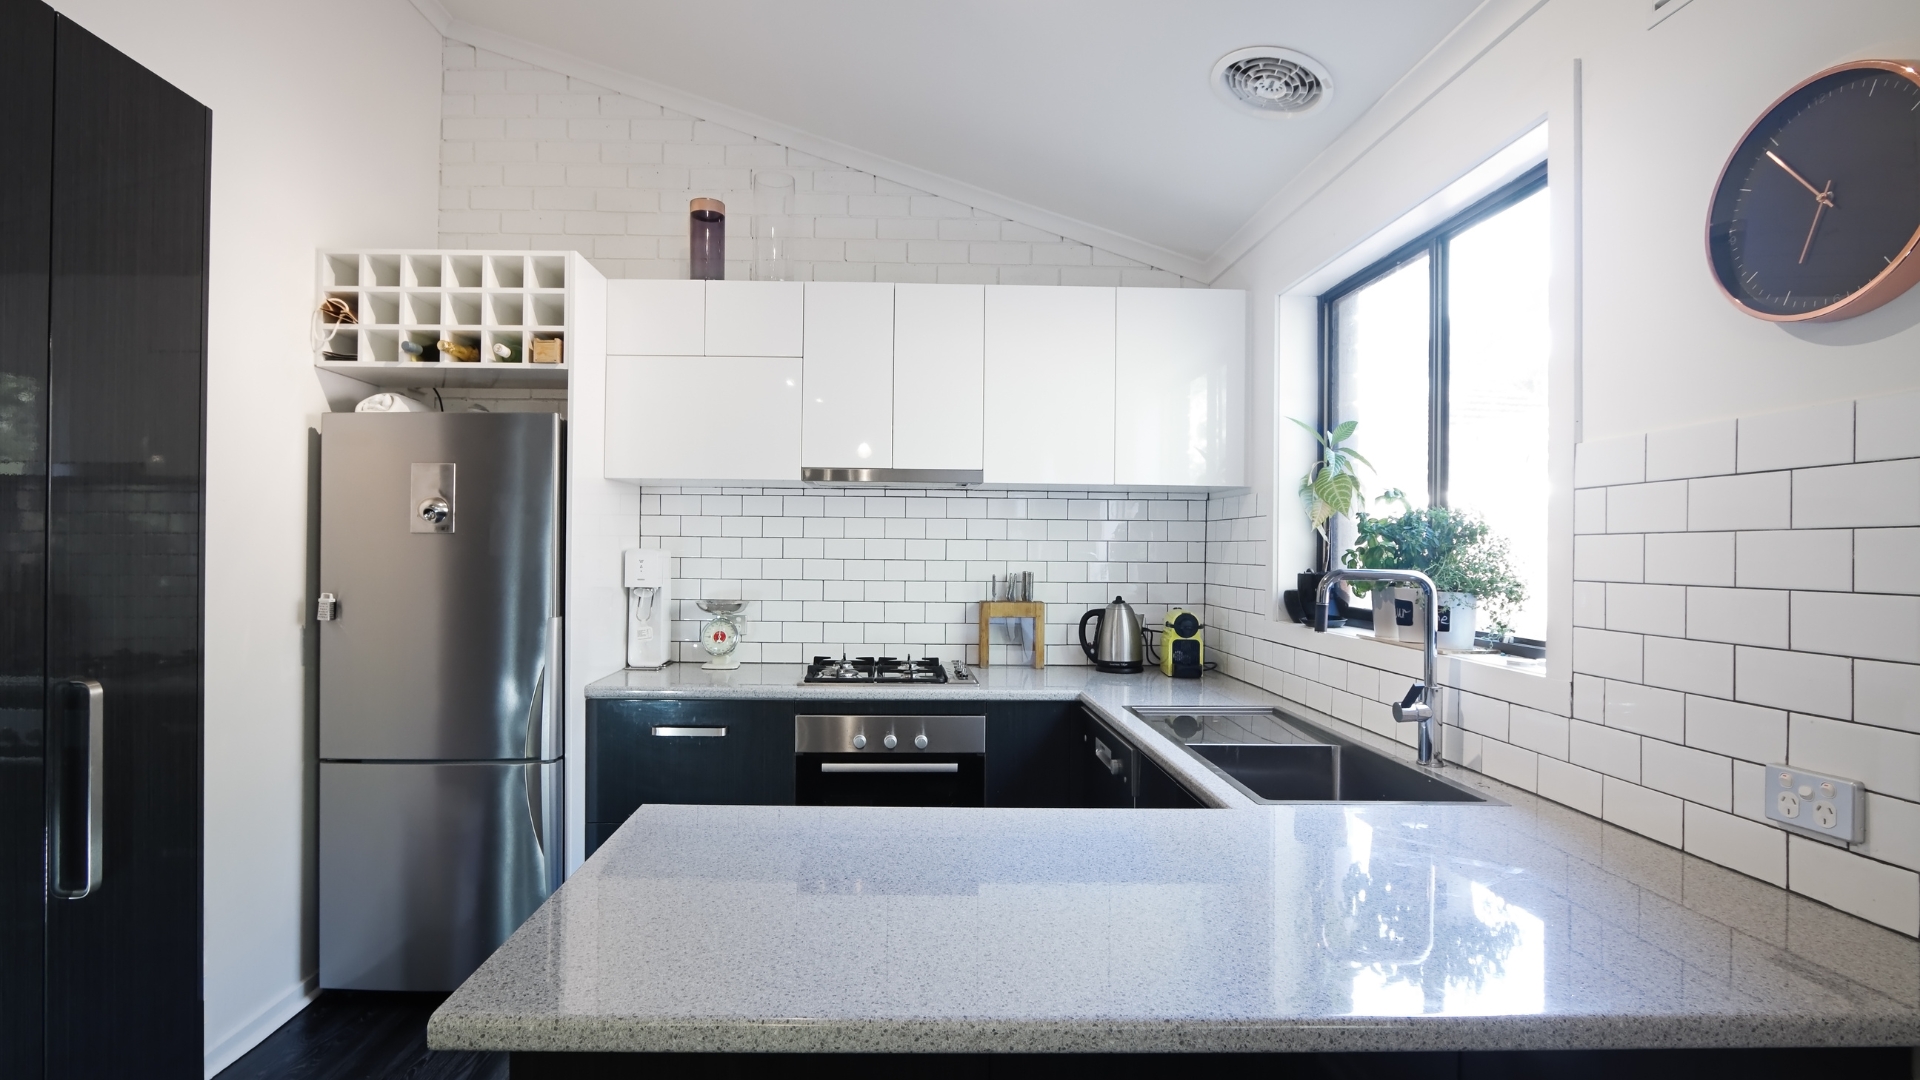 Clean and classic white subway tile kitchen backsplash and easy backsplash ideas